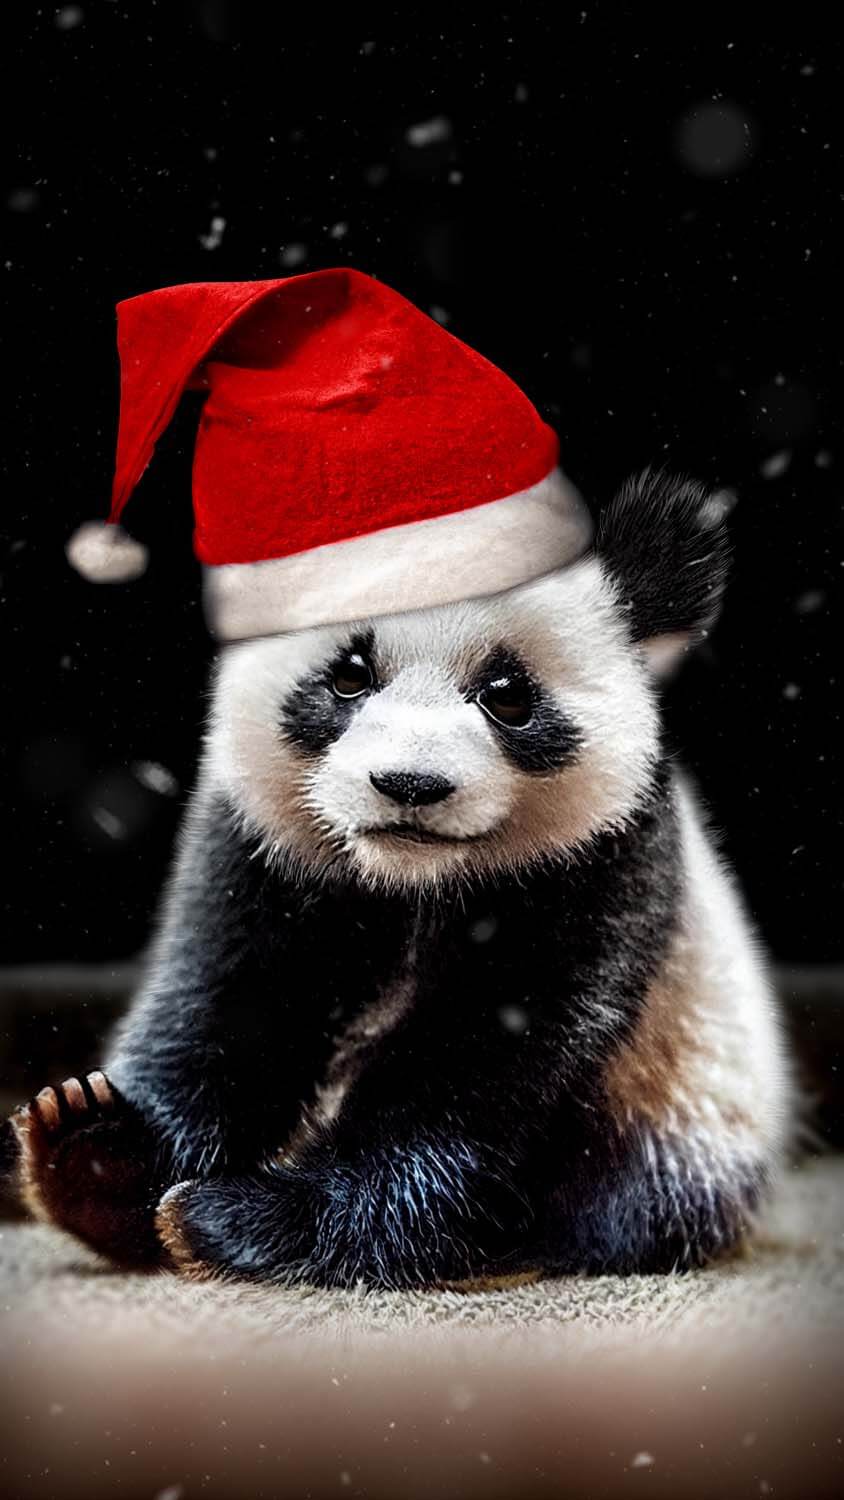 Christmas Panda IPhone Wallpaper HD - IPhone Wallpapers : iPhone Wallpapers